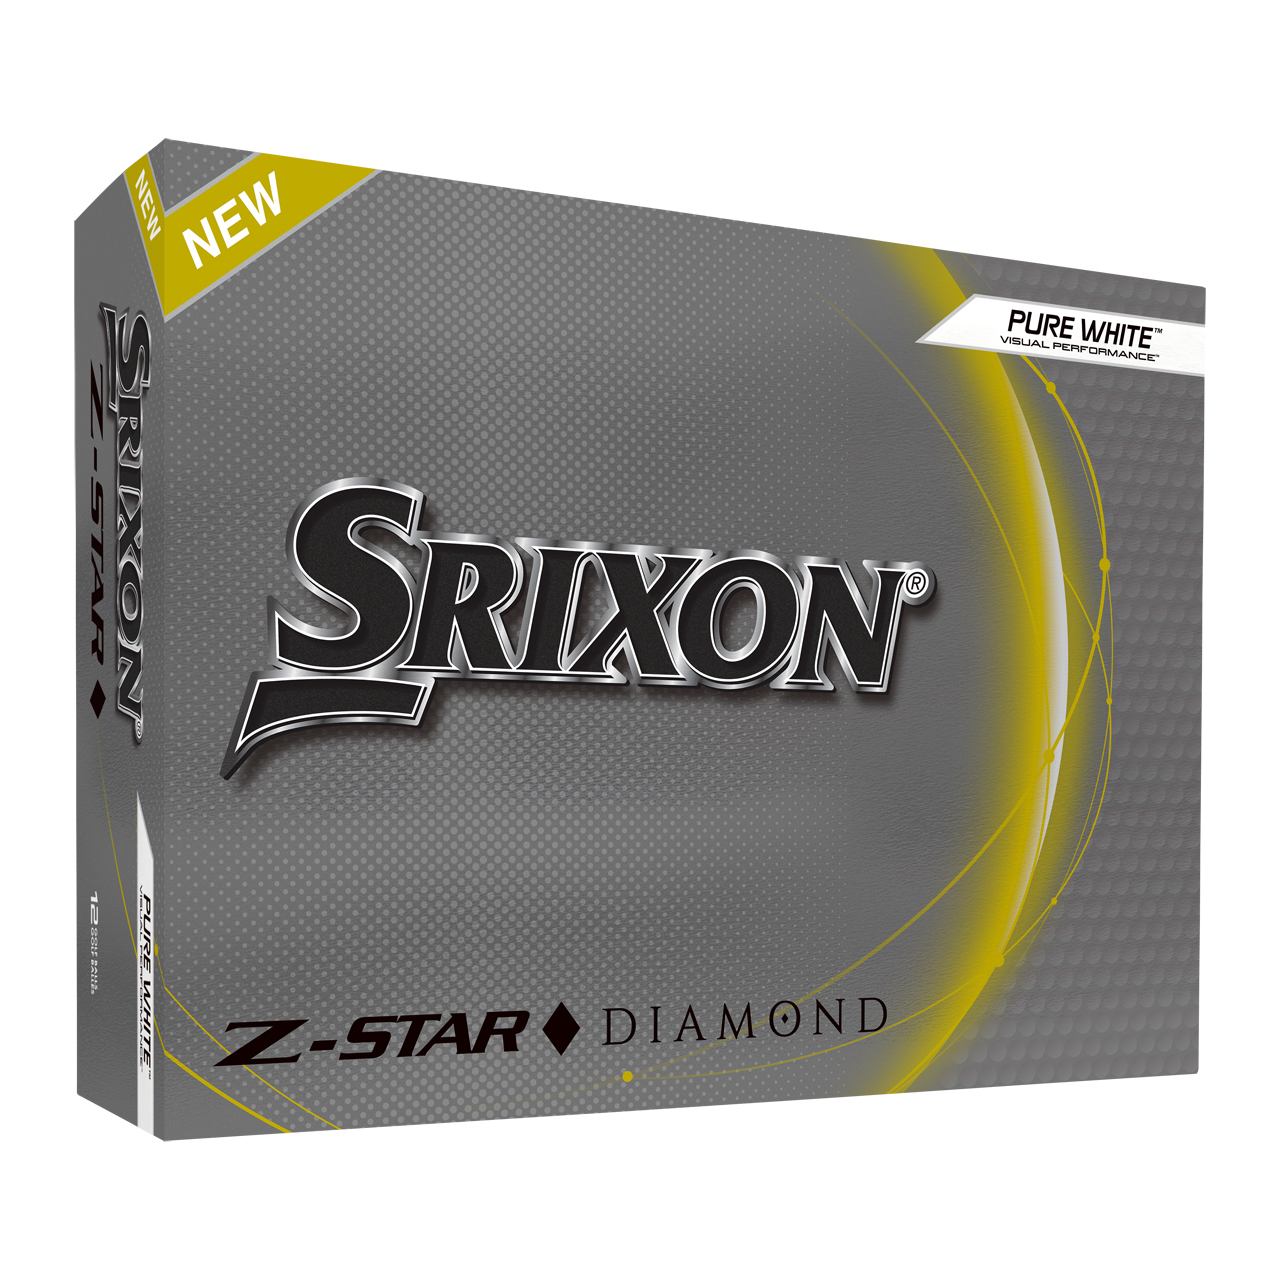 Z-Star Diamond, Ballen 3-pack - Wh